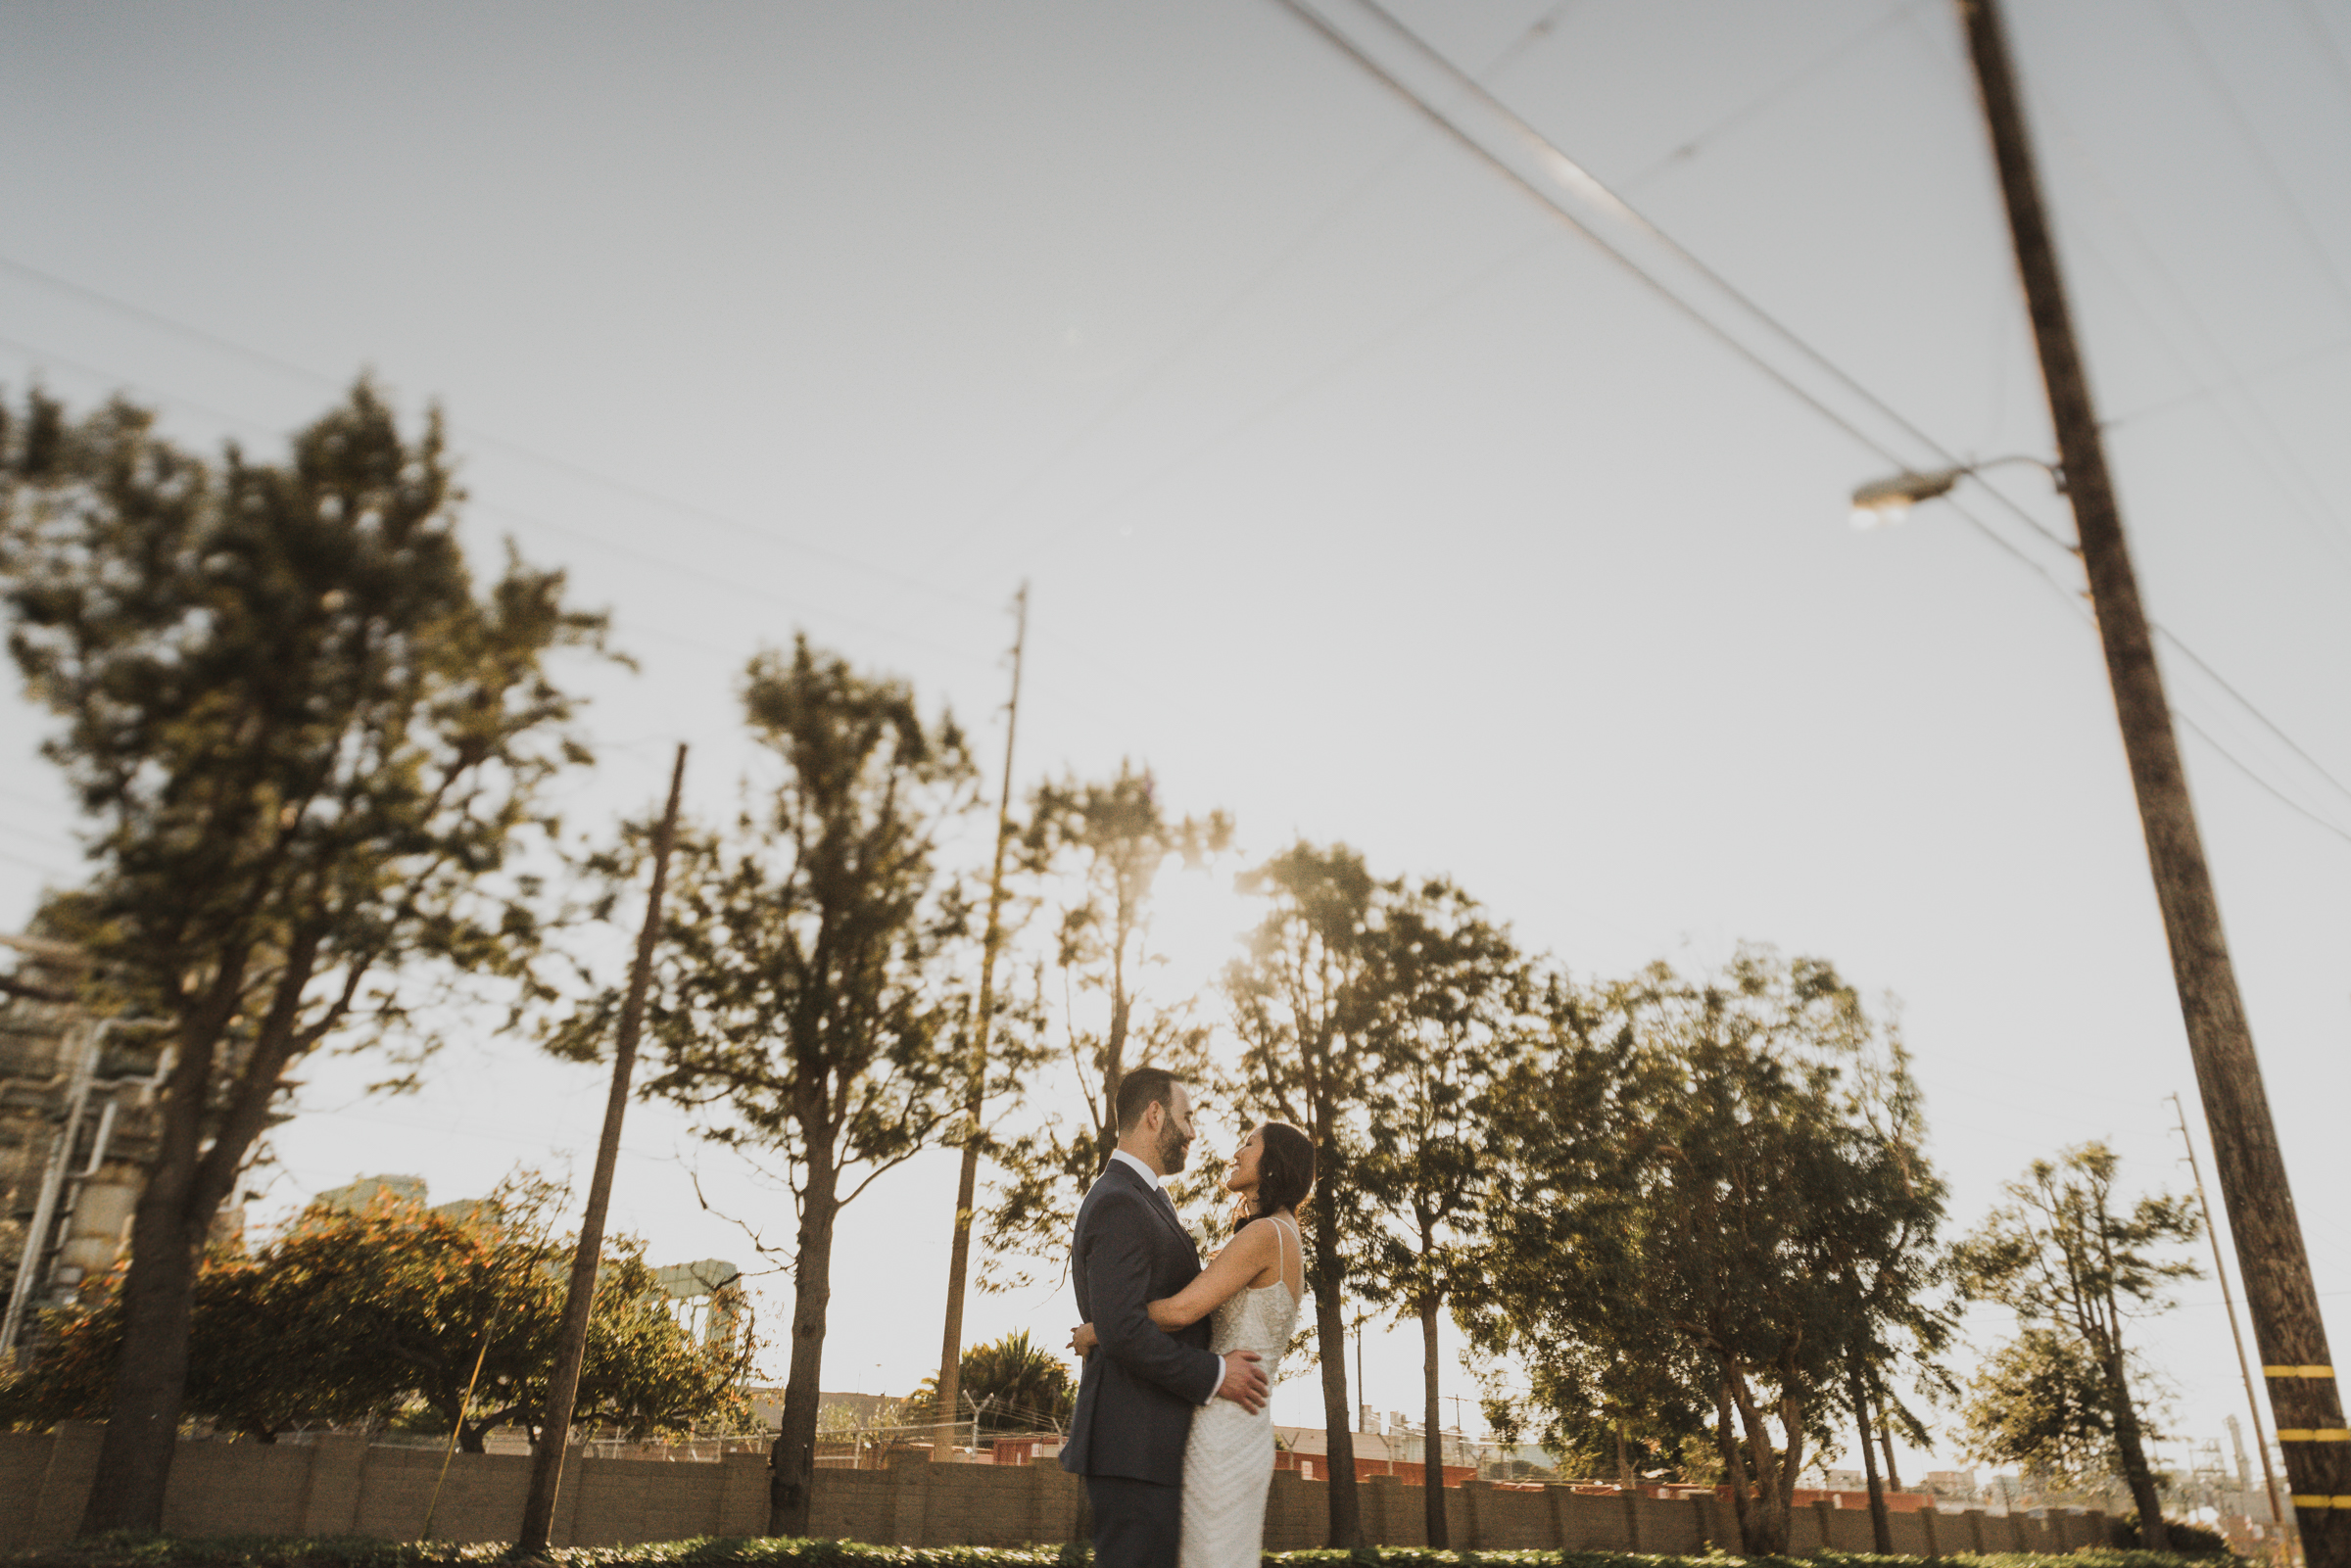 ©Isaiah + Taylor Photography - Big Door Studios Wedding, El Segundo, Los Angeles Wedding Photographer-35.jpg